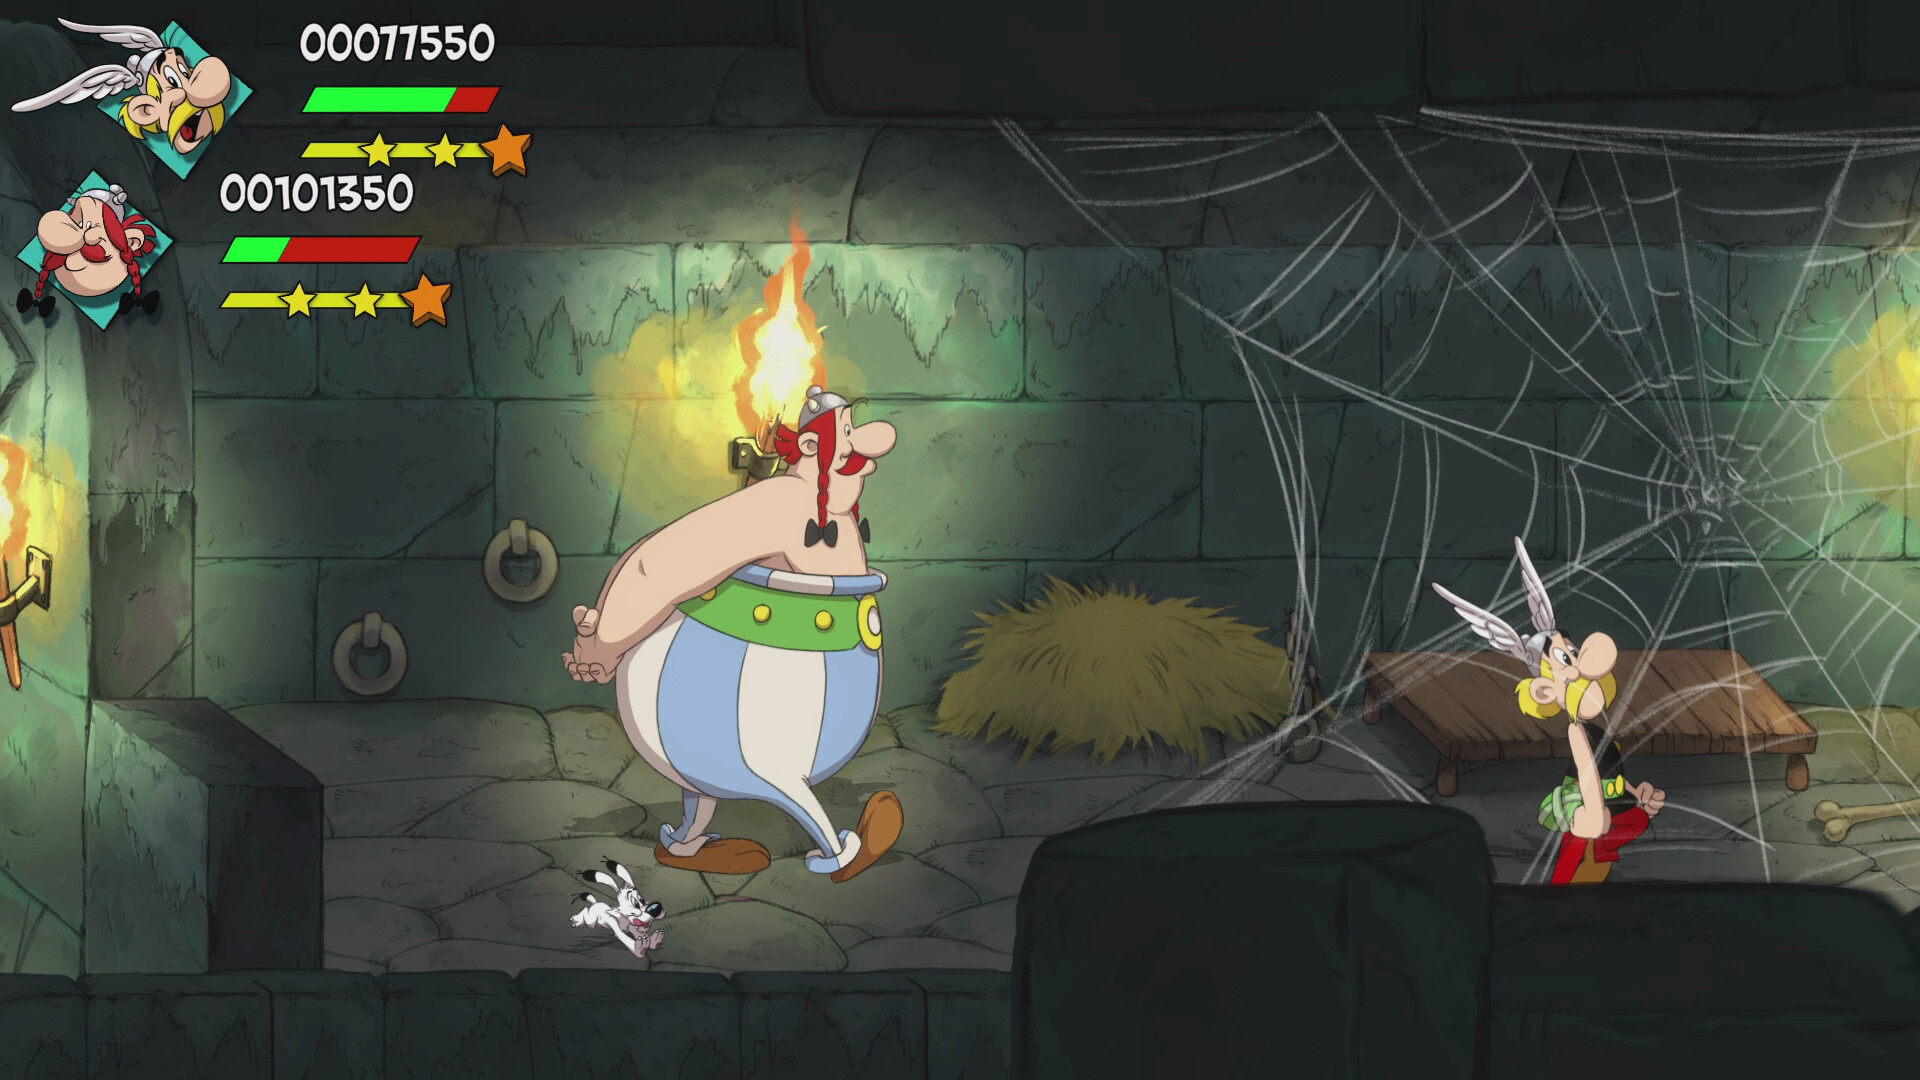 Asterix & Obelix Slap Them All! 2 on Steam